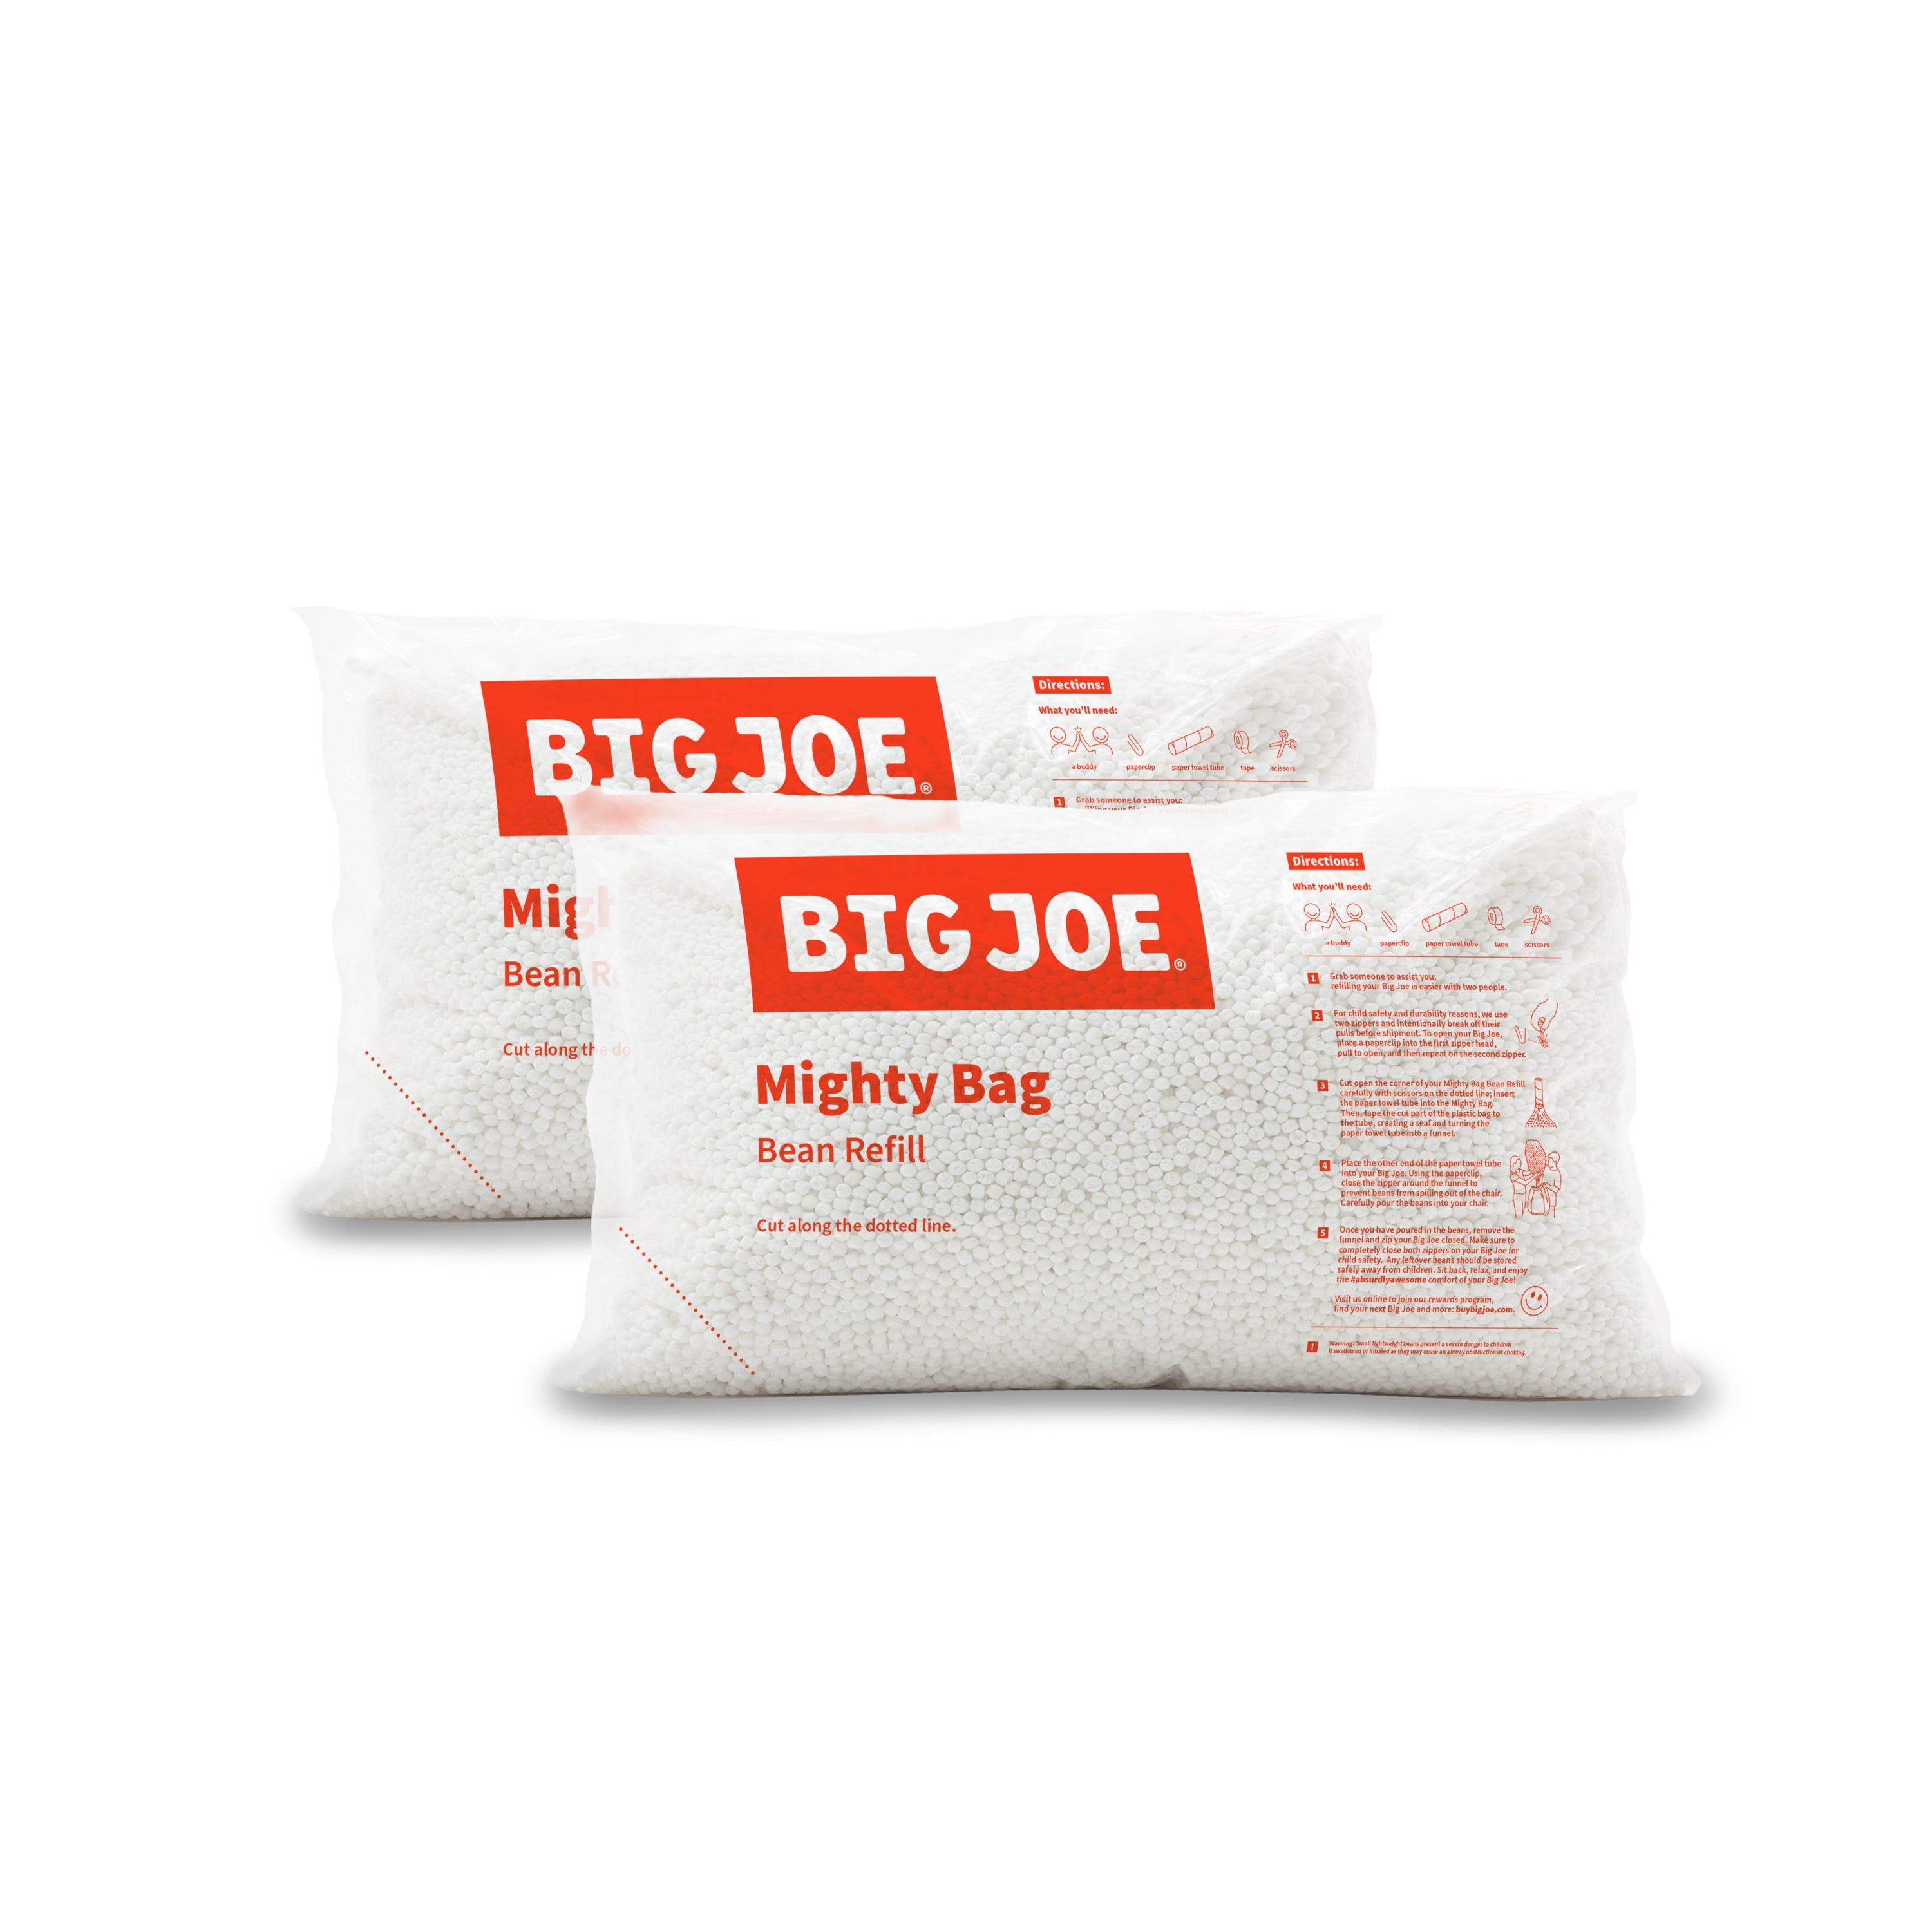 Big Joe The Original Bean Bag in Stretch Limo Black Bundle Megahh Bean Refill 100-Liter in Single Pack 